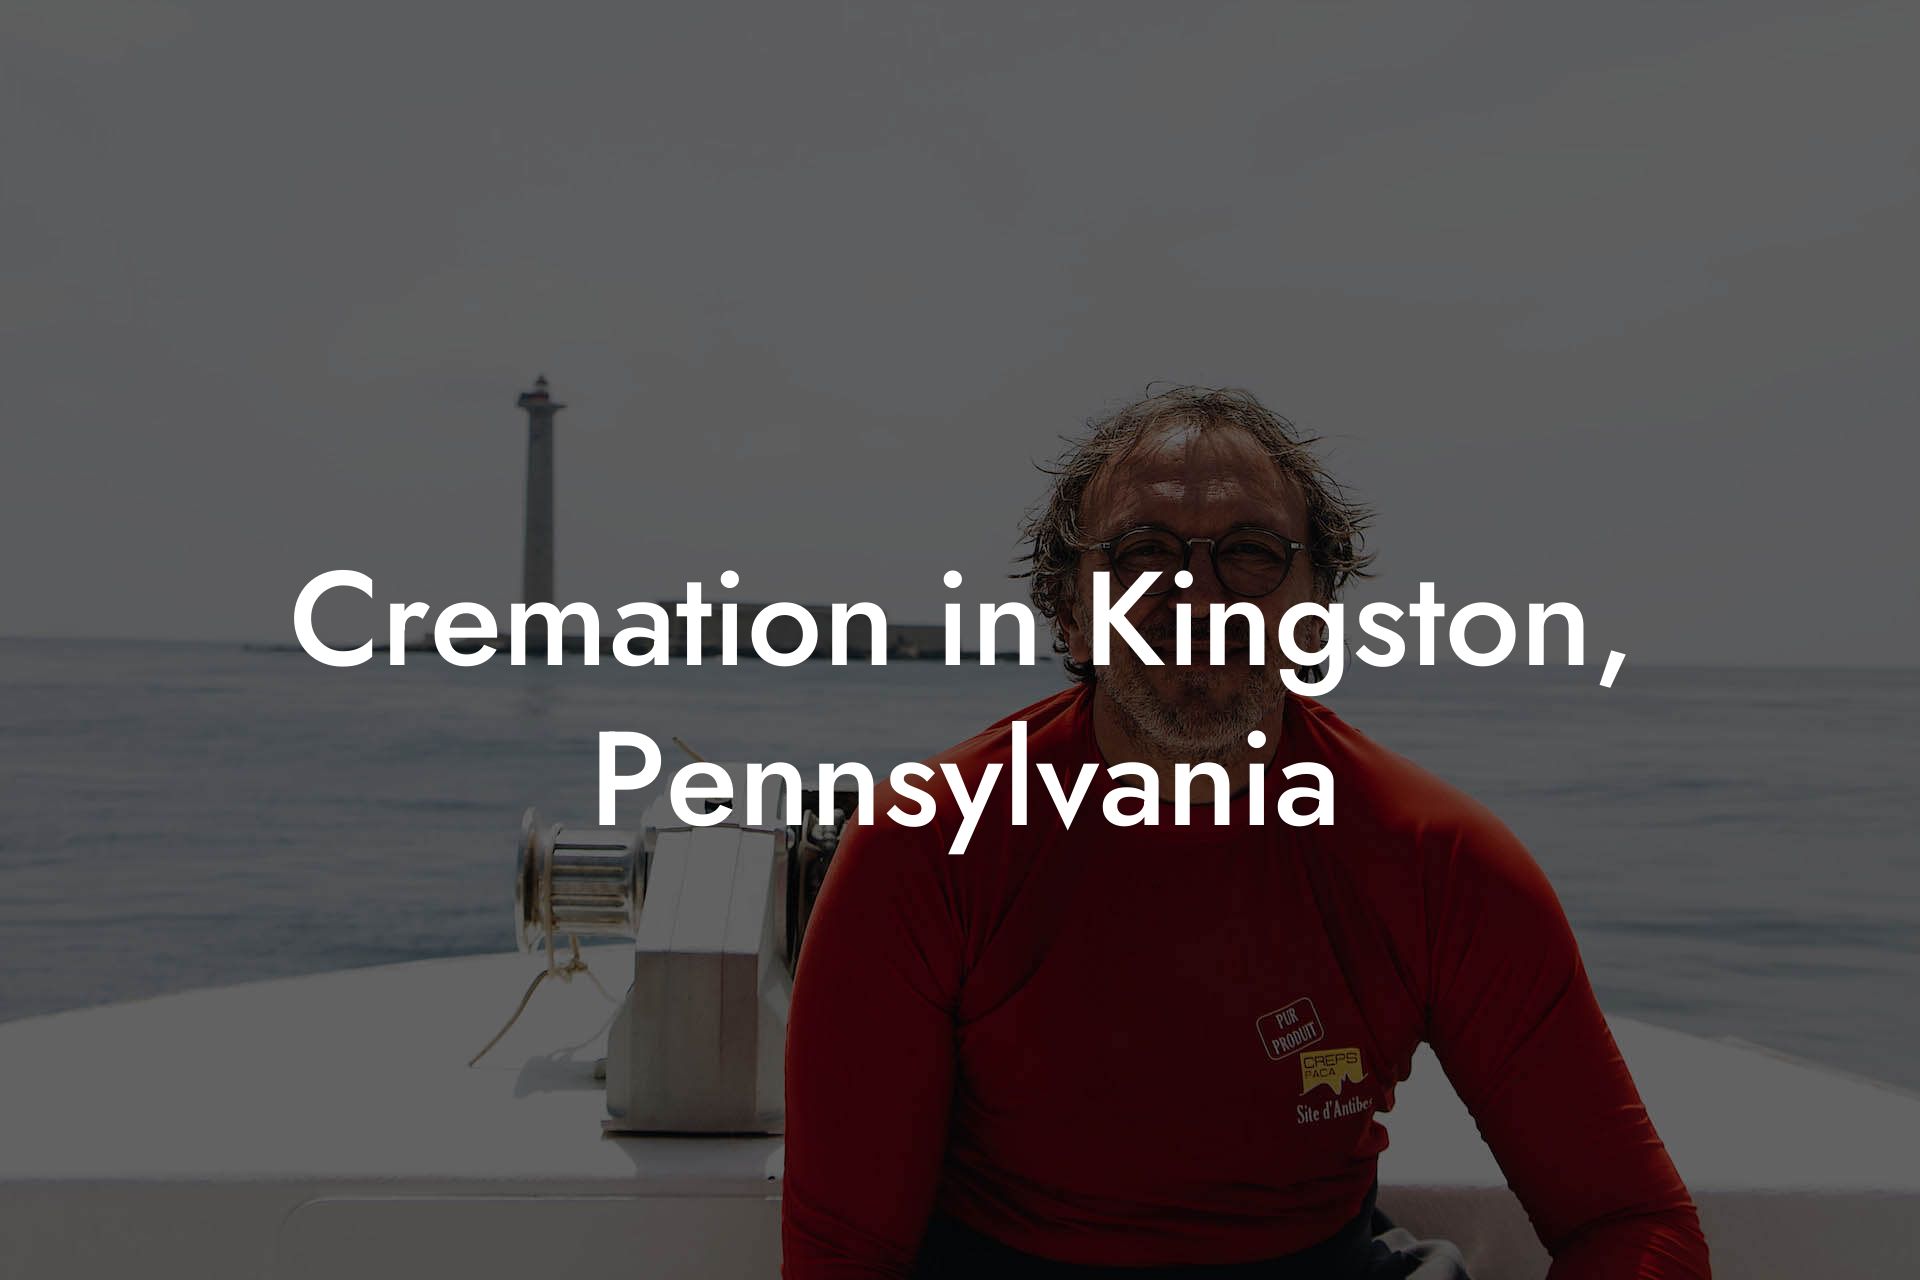 Cremation in Kingston, Pennsylvania